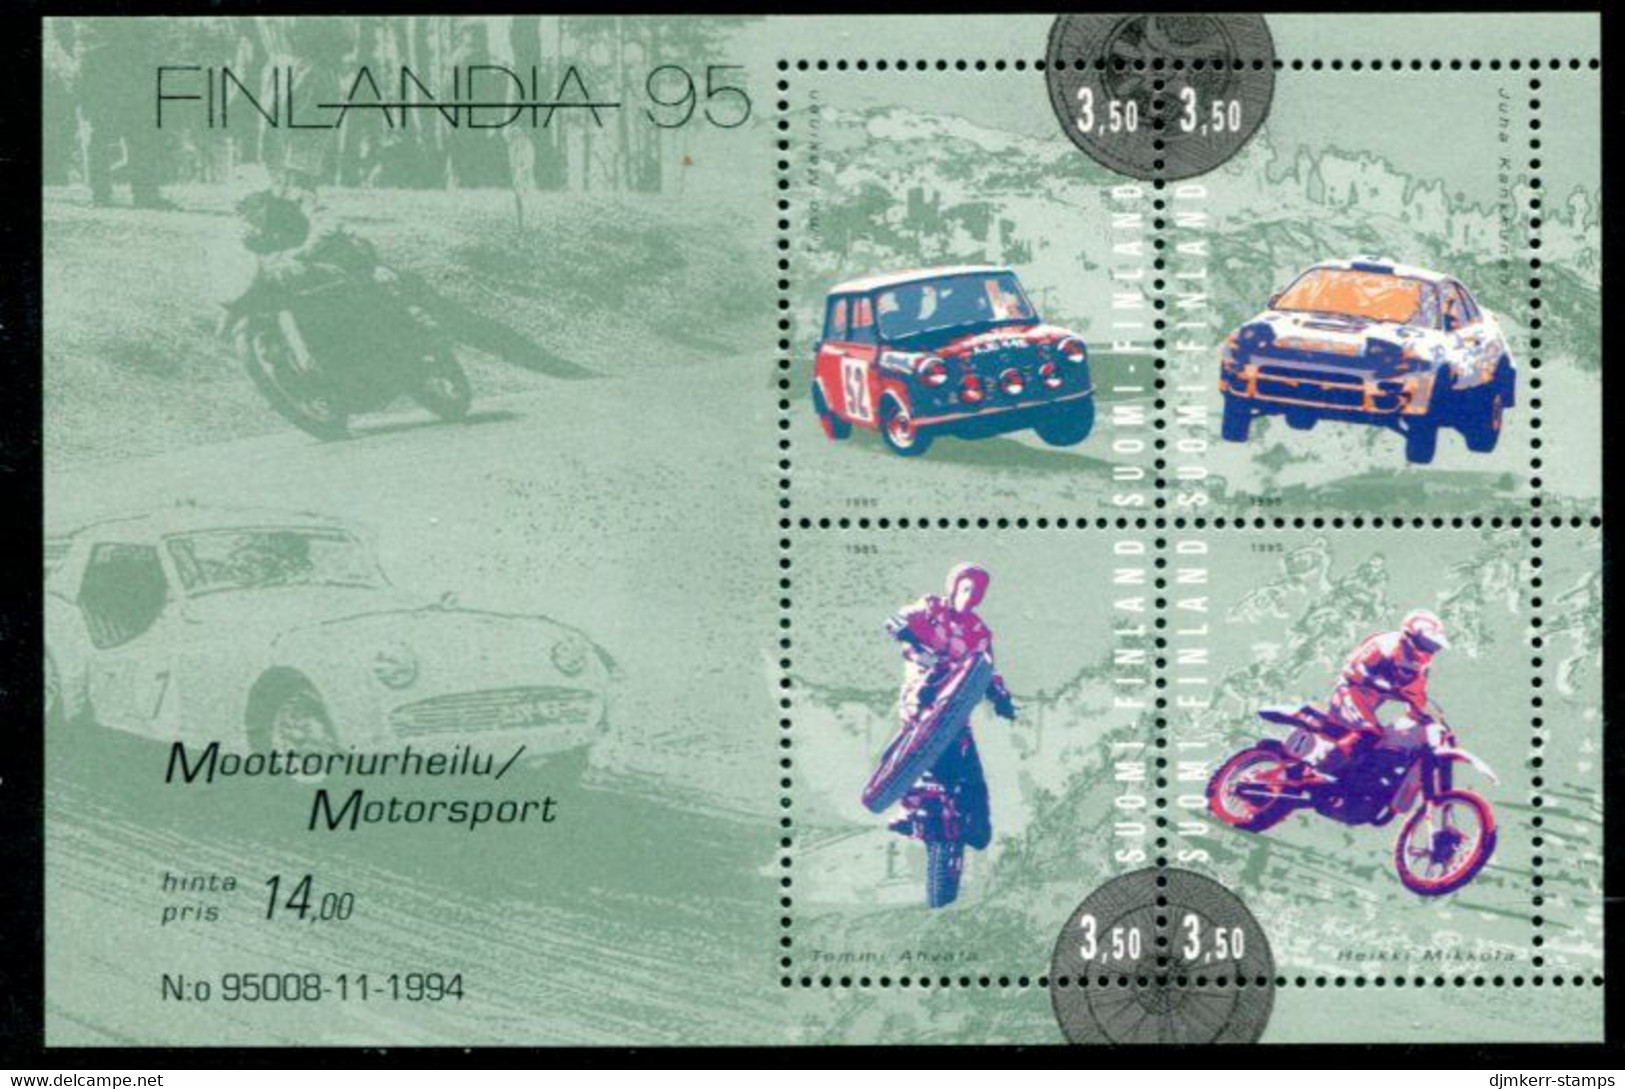 FINLAND 1995 FINLANDIA '95: Motor Sport  Block MNH / **.  Michel Block 16 - Unused Stamps